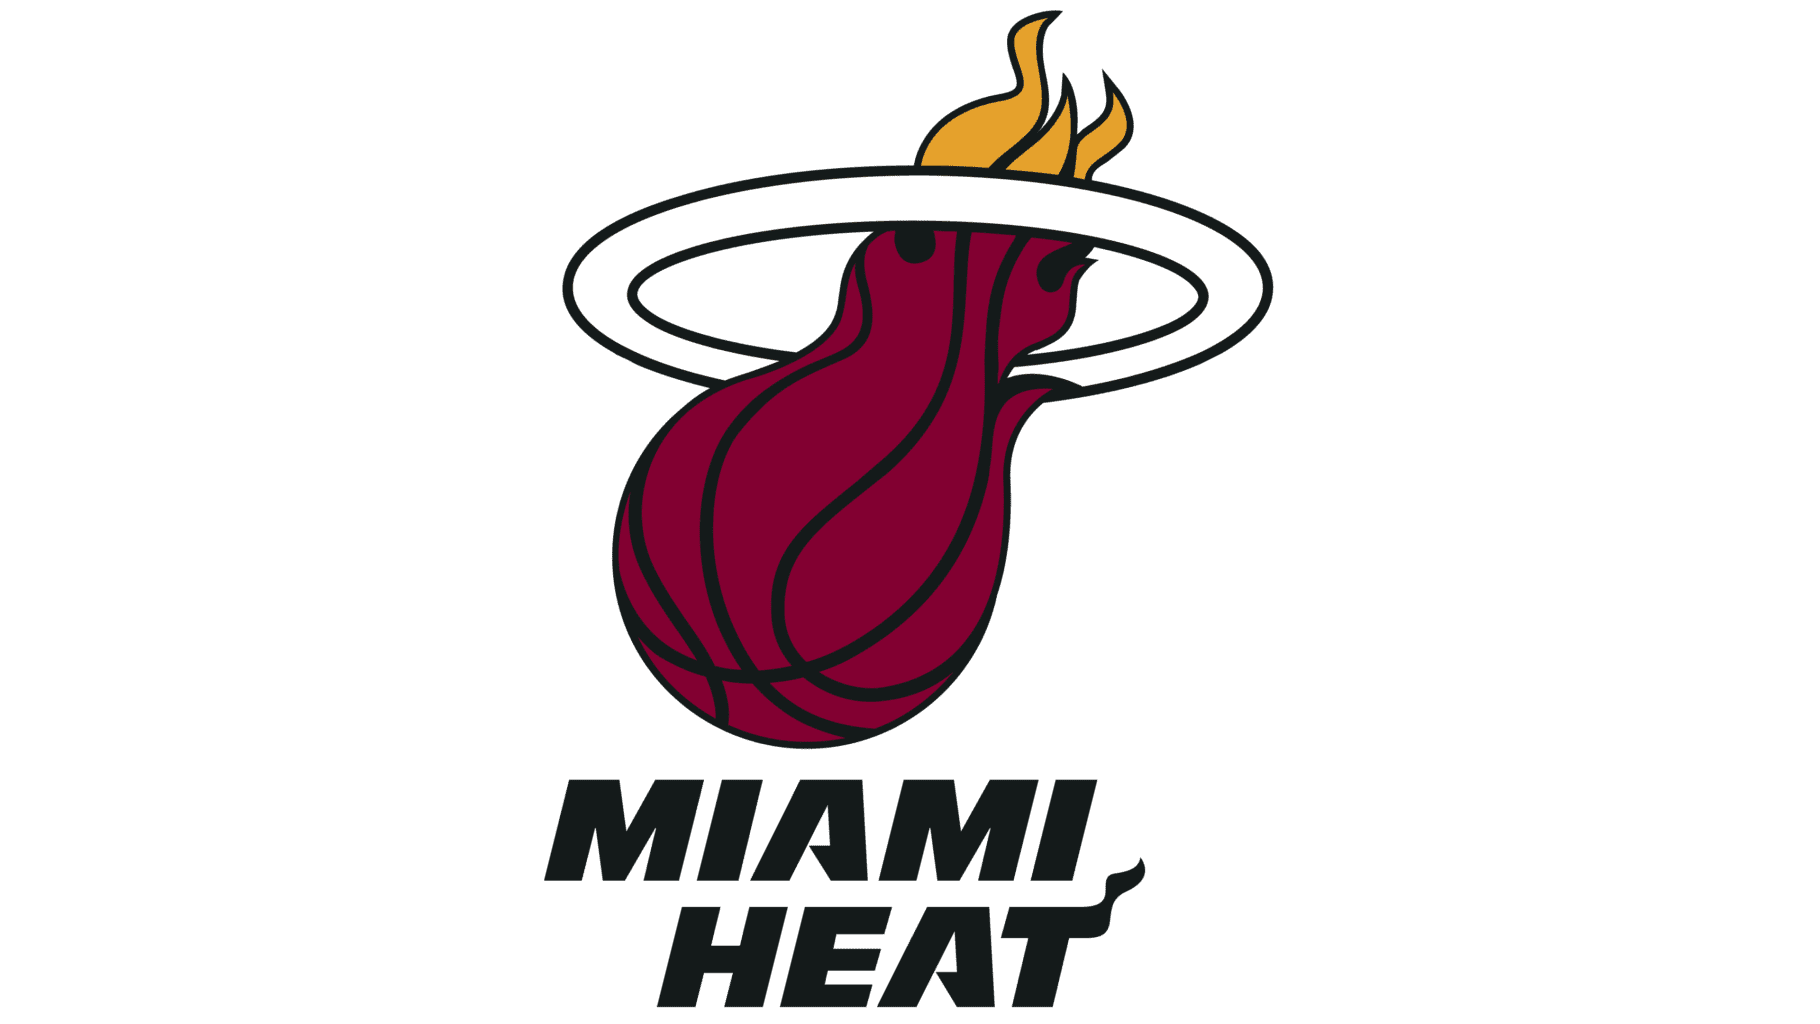 simbolo do Miami Heat